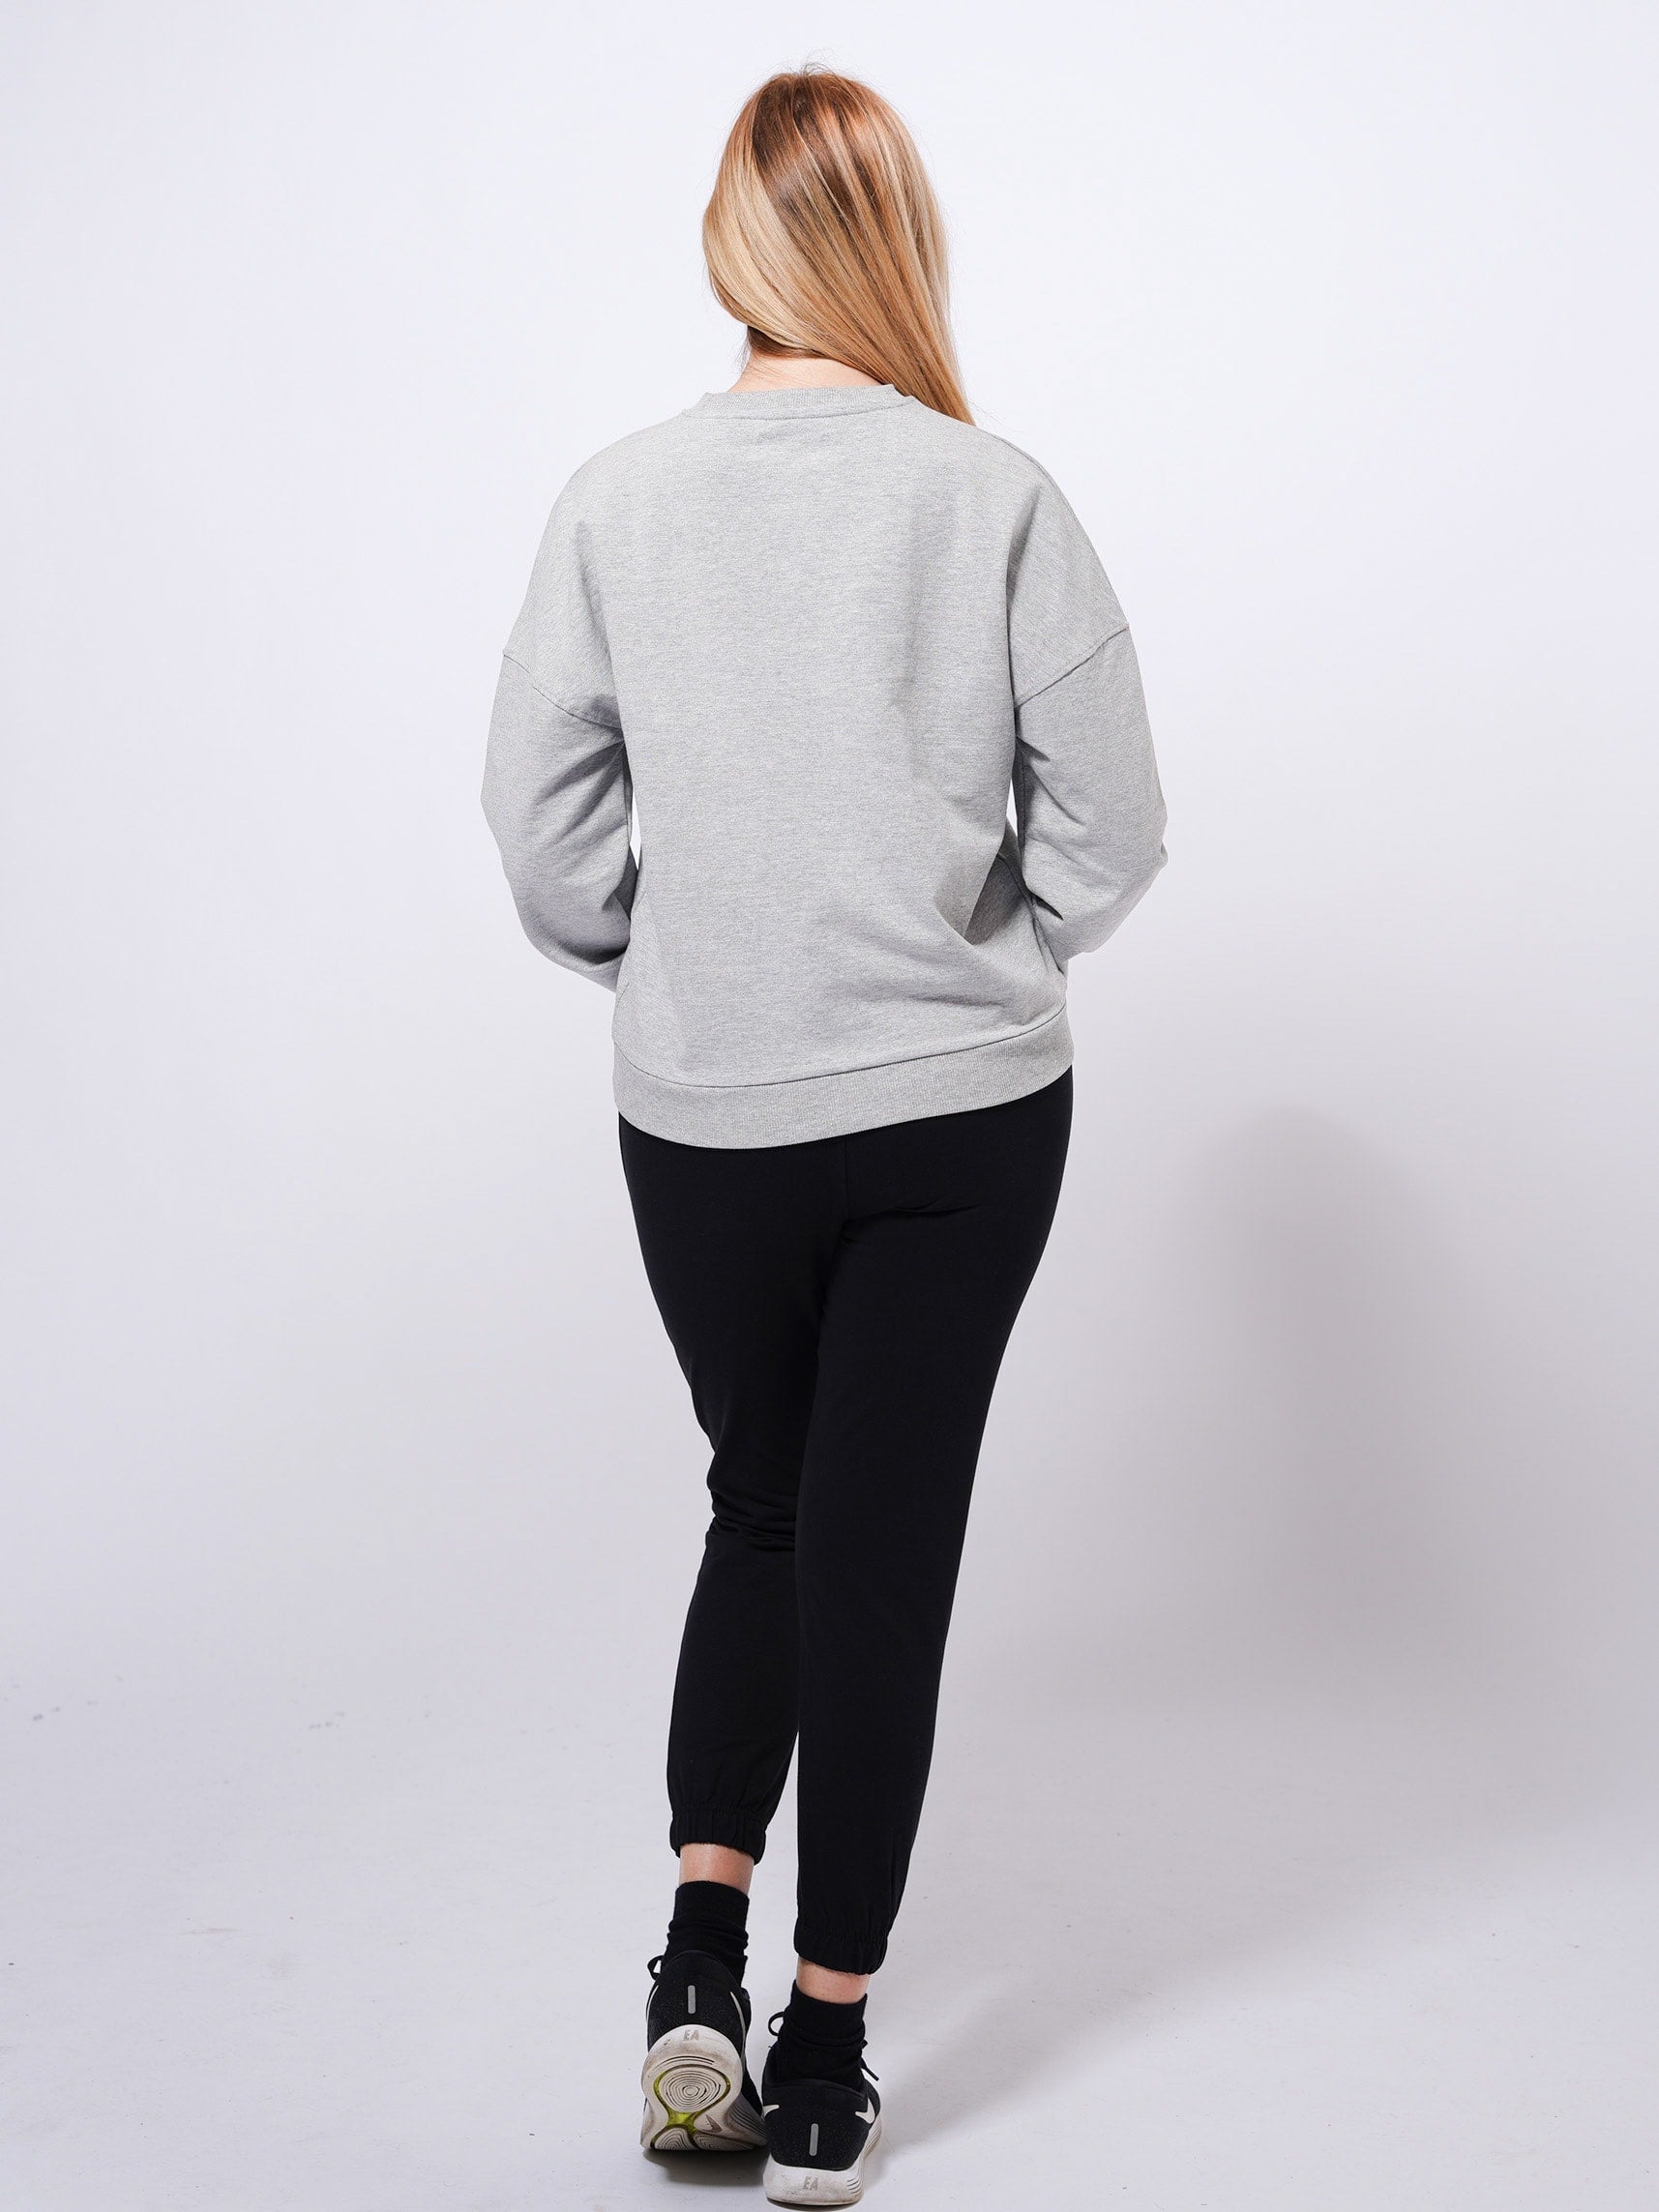 Women’s Hooded Sweatshirts in Grey Mélange Color - inteblu